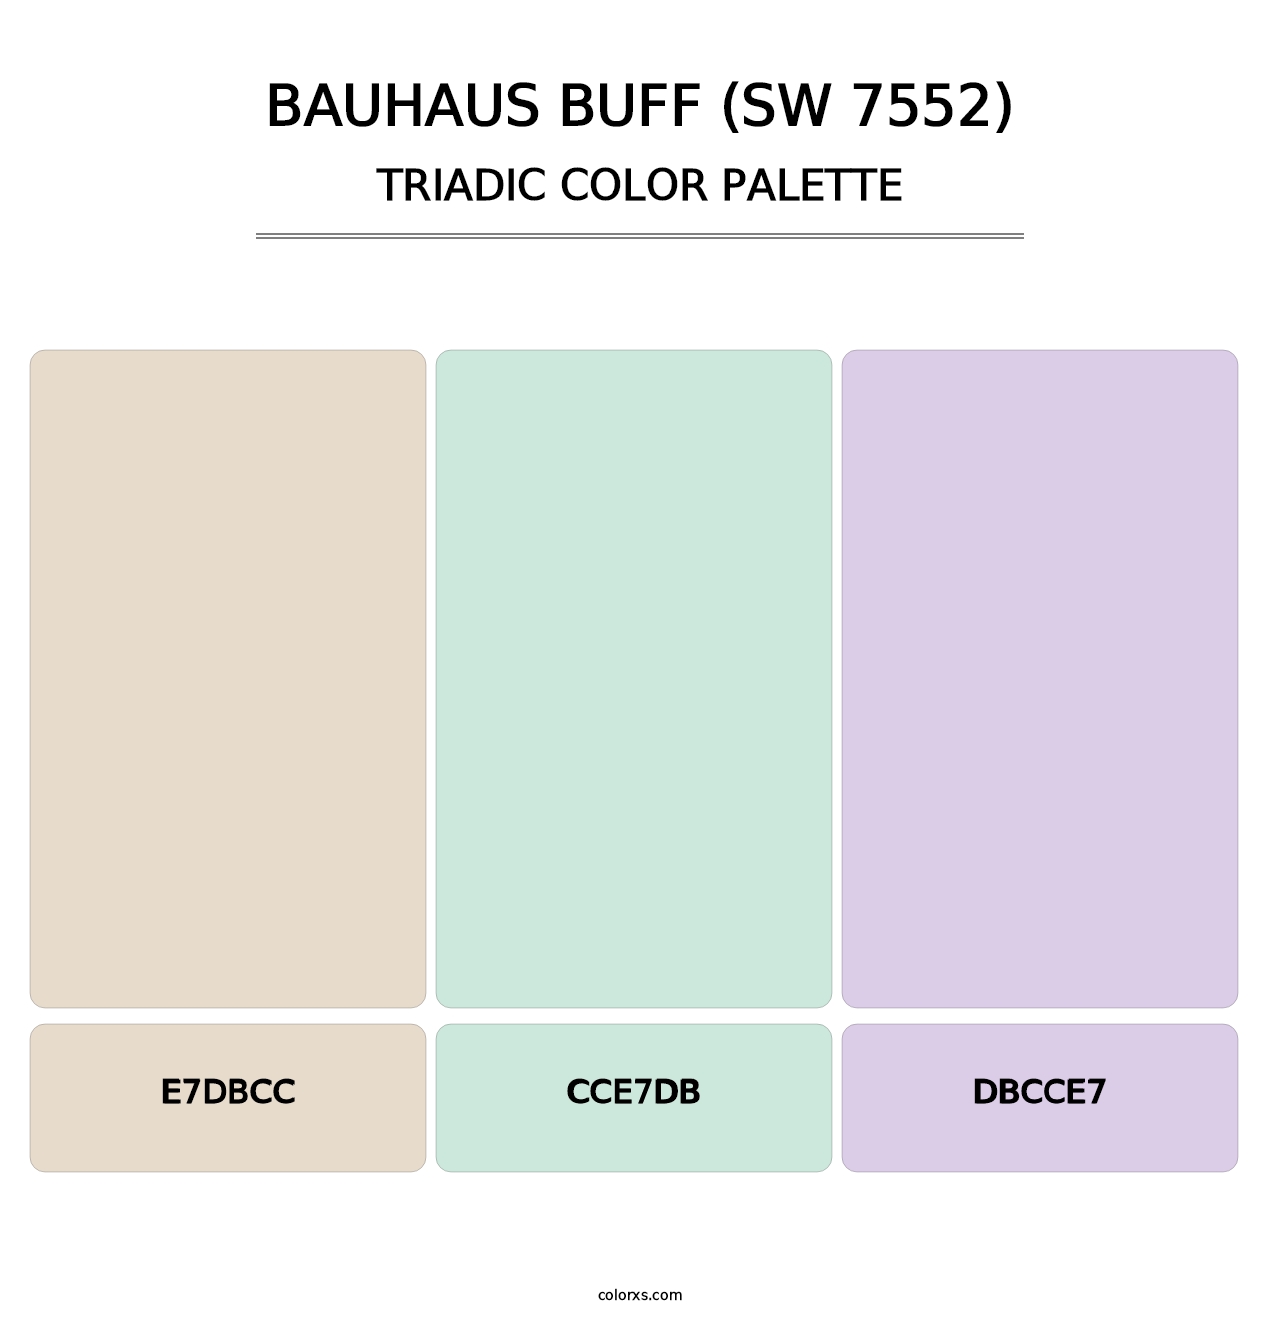 Bauhaus Buff (SW 7552) - Triadic Color Palette